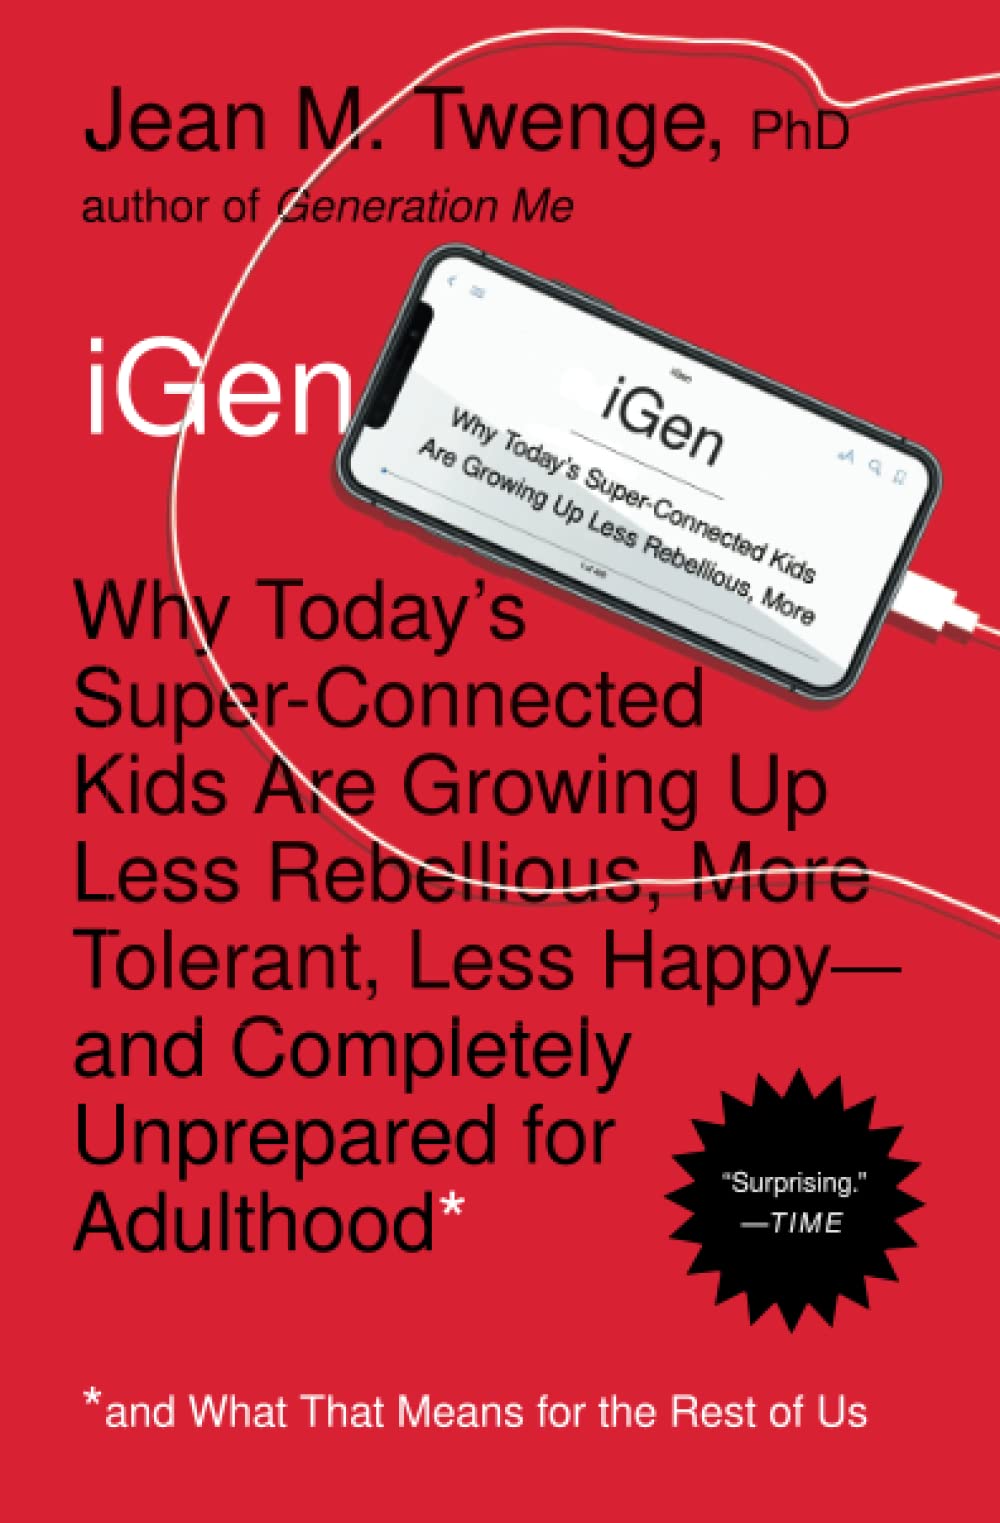  I Gen book cover